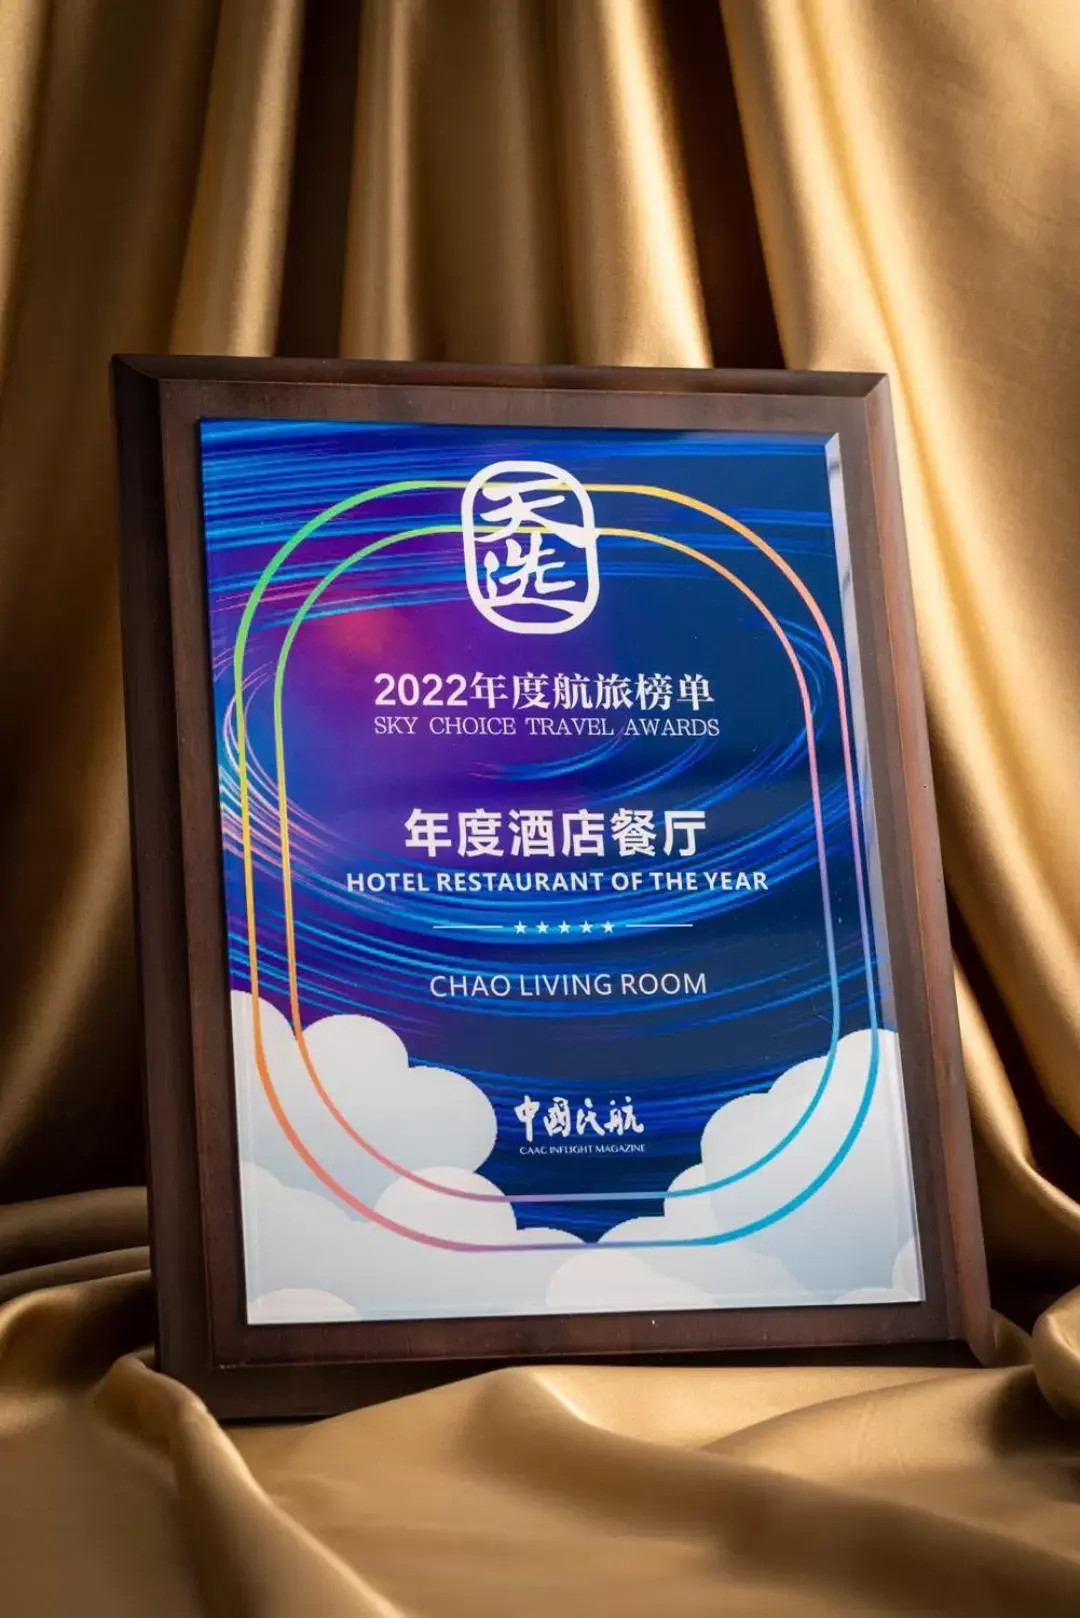 Certificate/Award, TV/Entertainment Center in CHAO Sanlitun Beijing